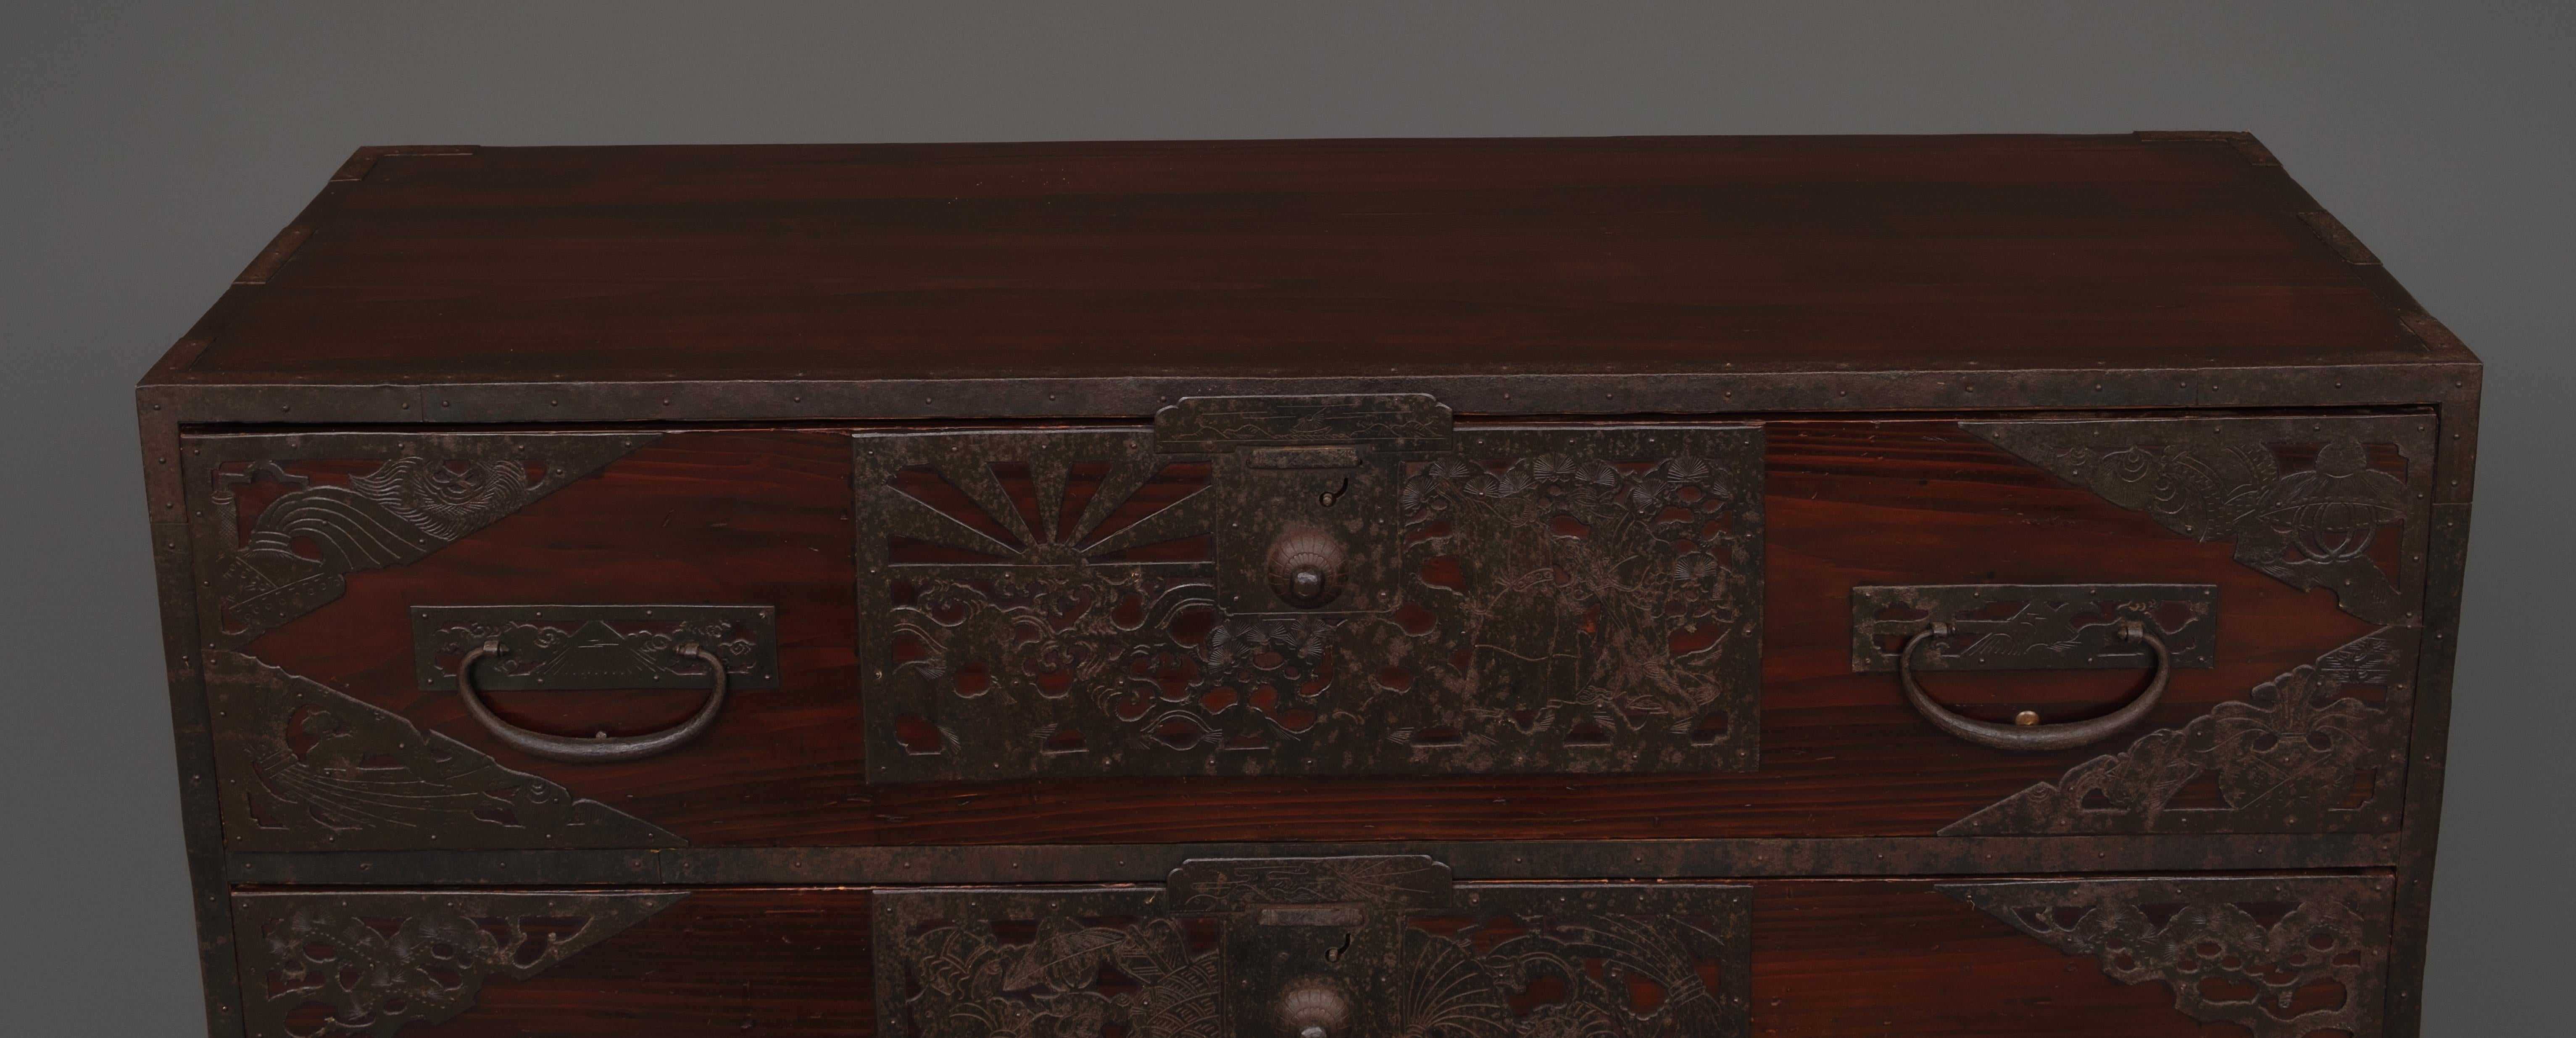 Japanese Sado ishô’dansu 衣装箪笥 (cabinet of drawers) with extensive iron hardware For Sale 3